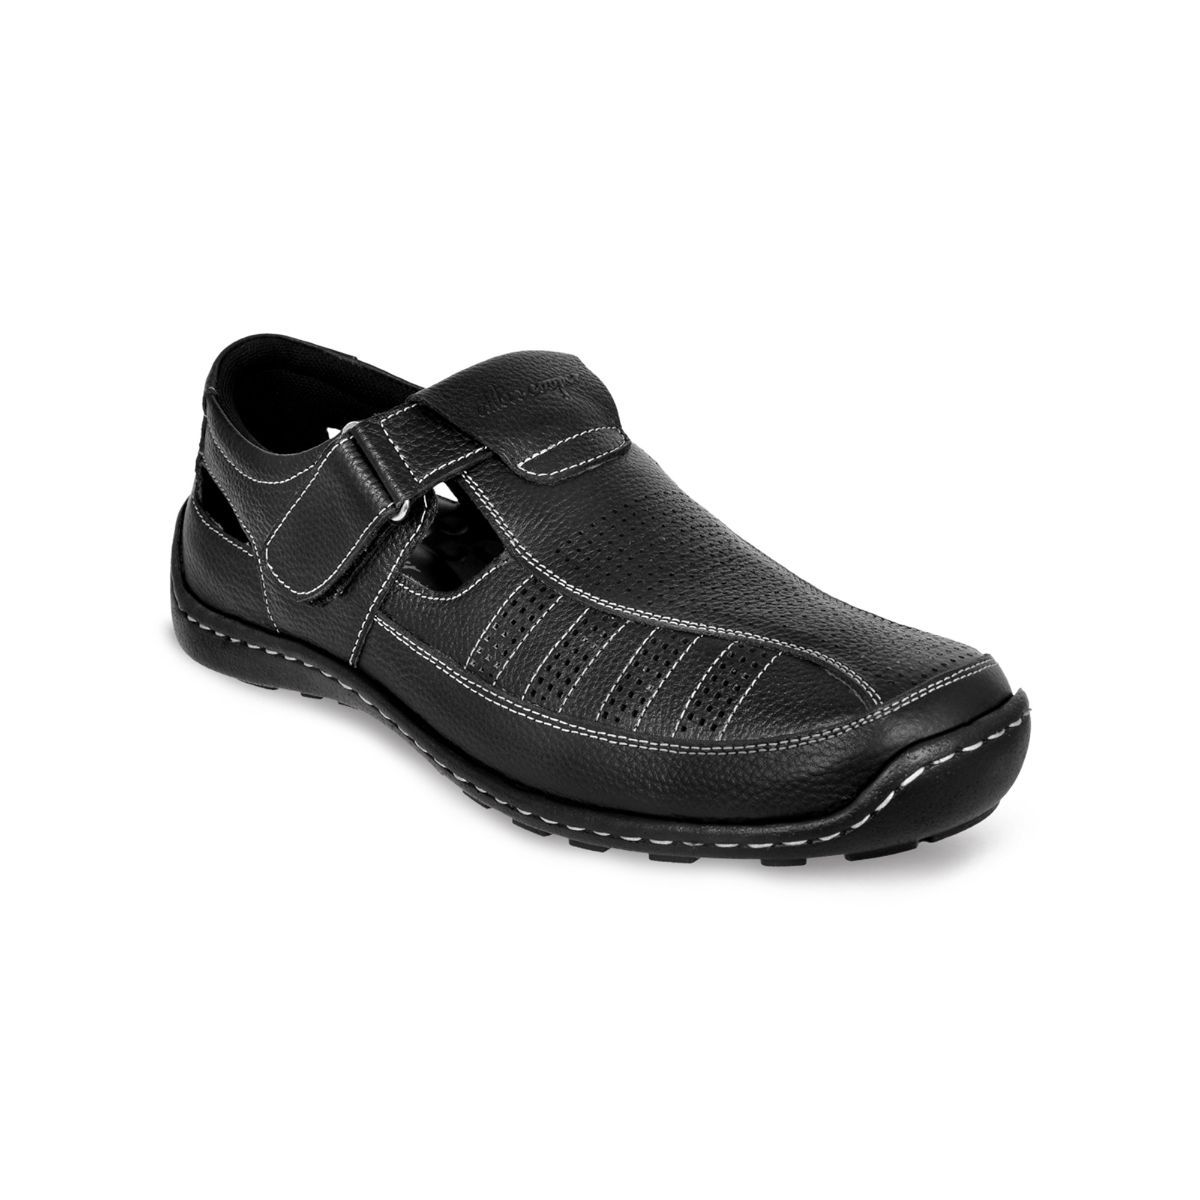 Allen Cooper Black Leather Sandals - 8